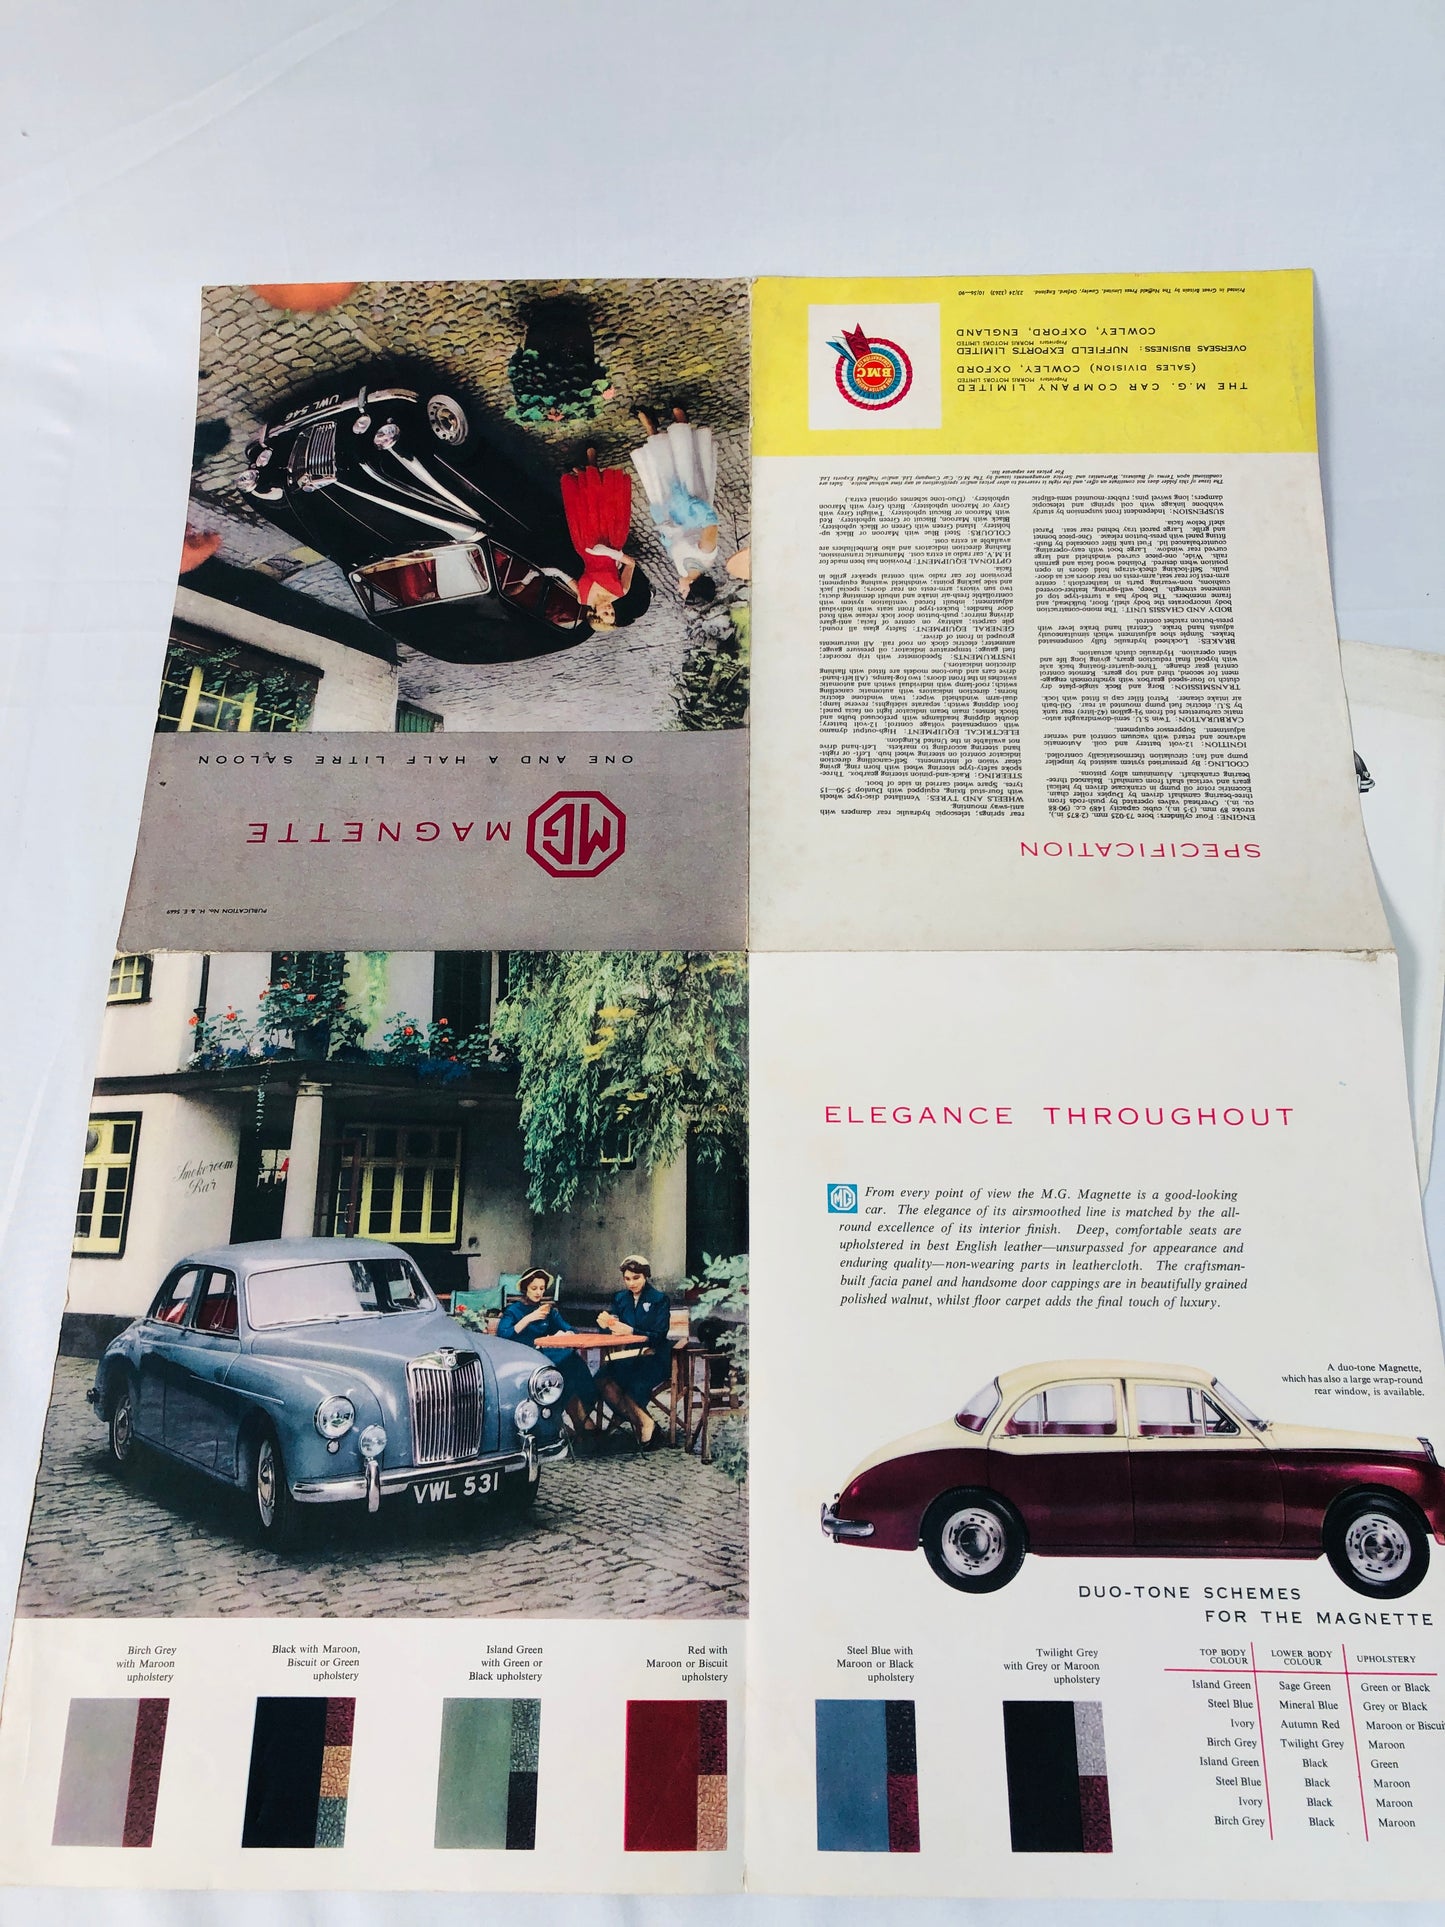 
                  
                    1953 MG Magnette 1 1/2 Lire Saloon Sales Brochure (15955)
                  
                